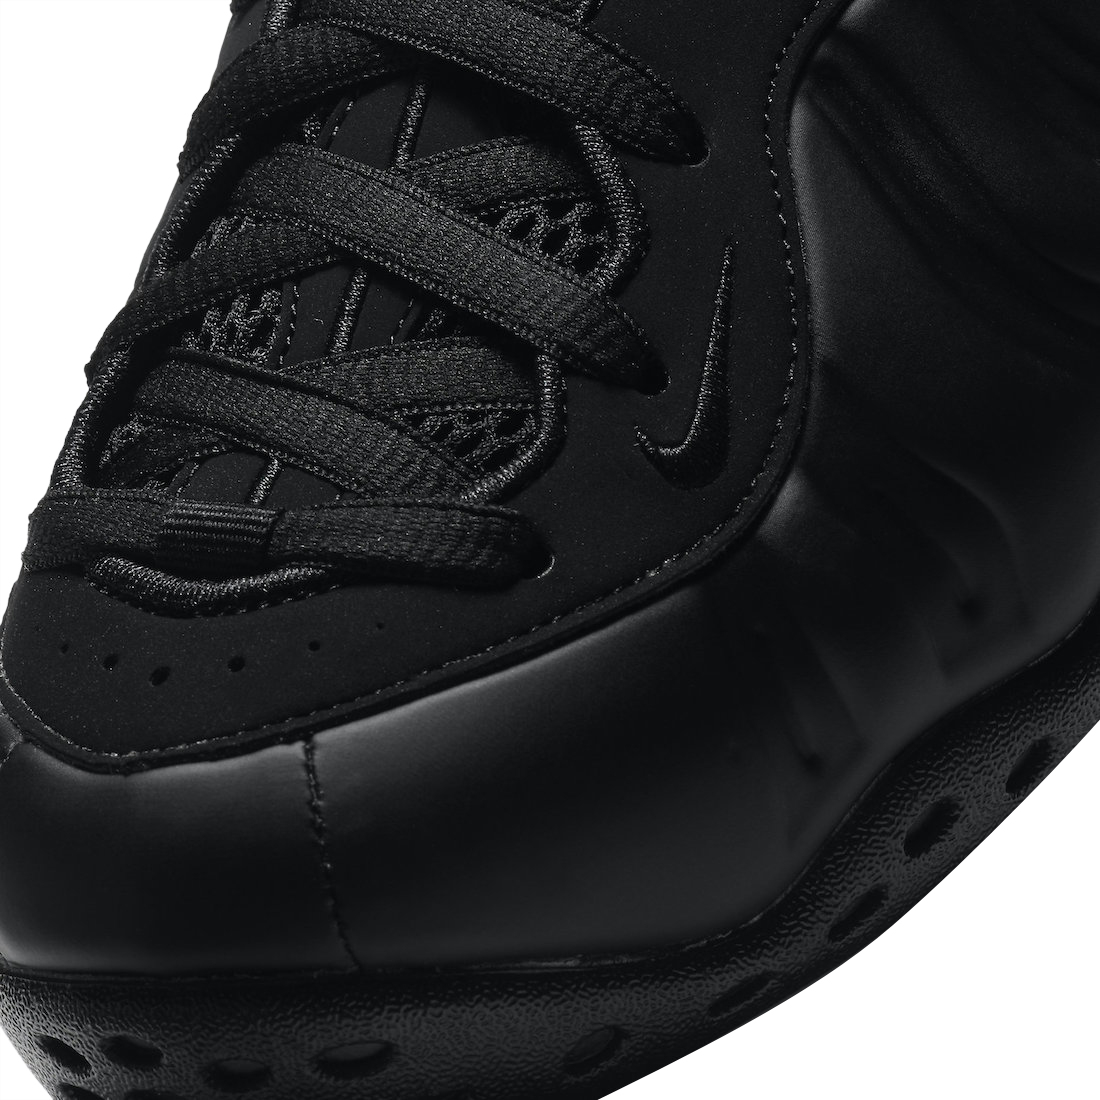 Shop Nike Air Foamposite One 314996-001 black